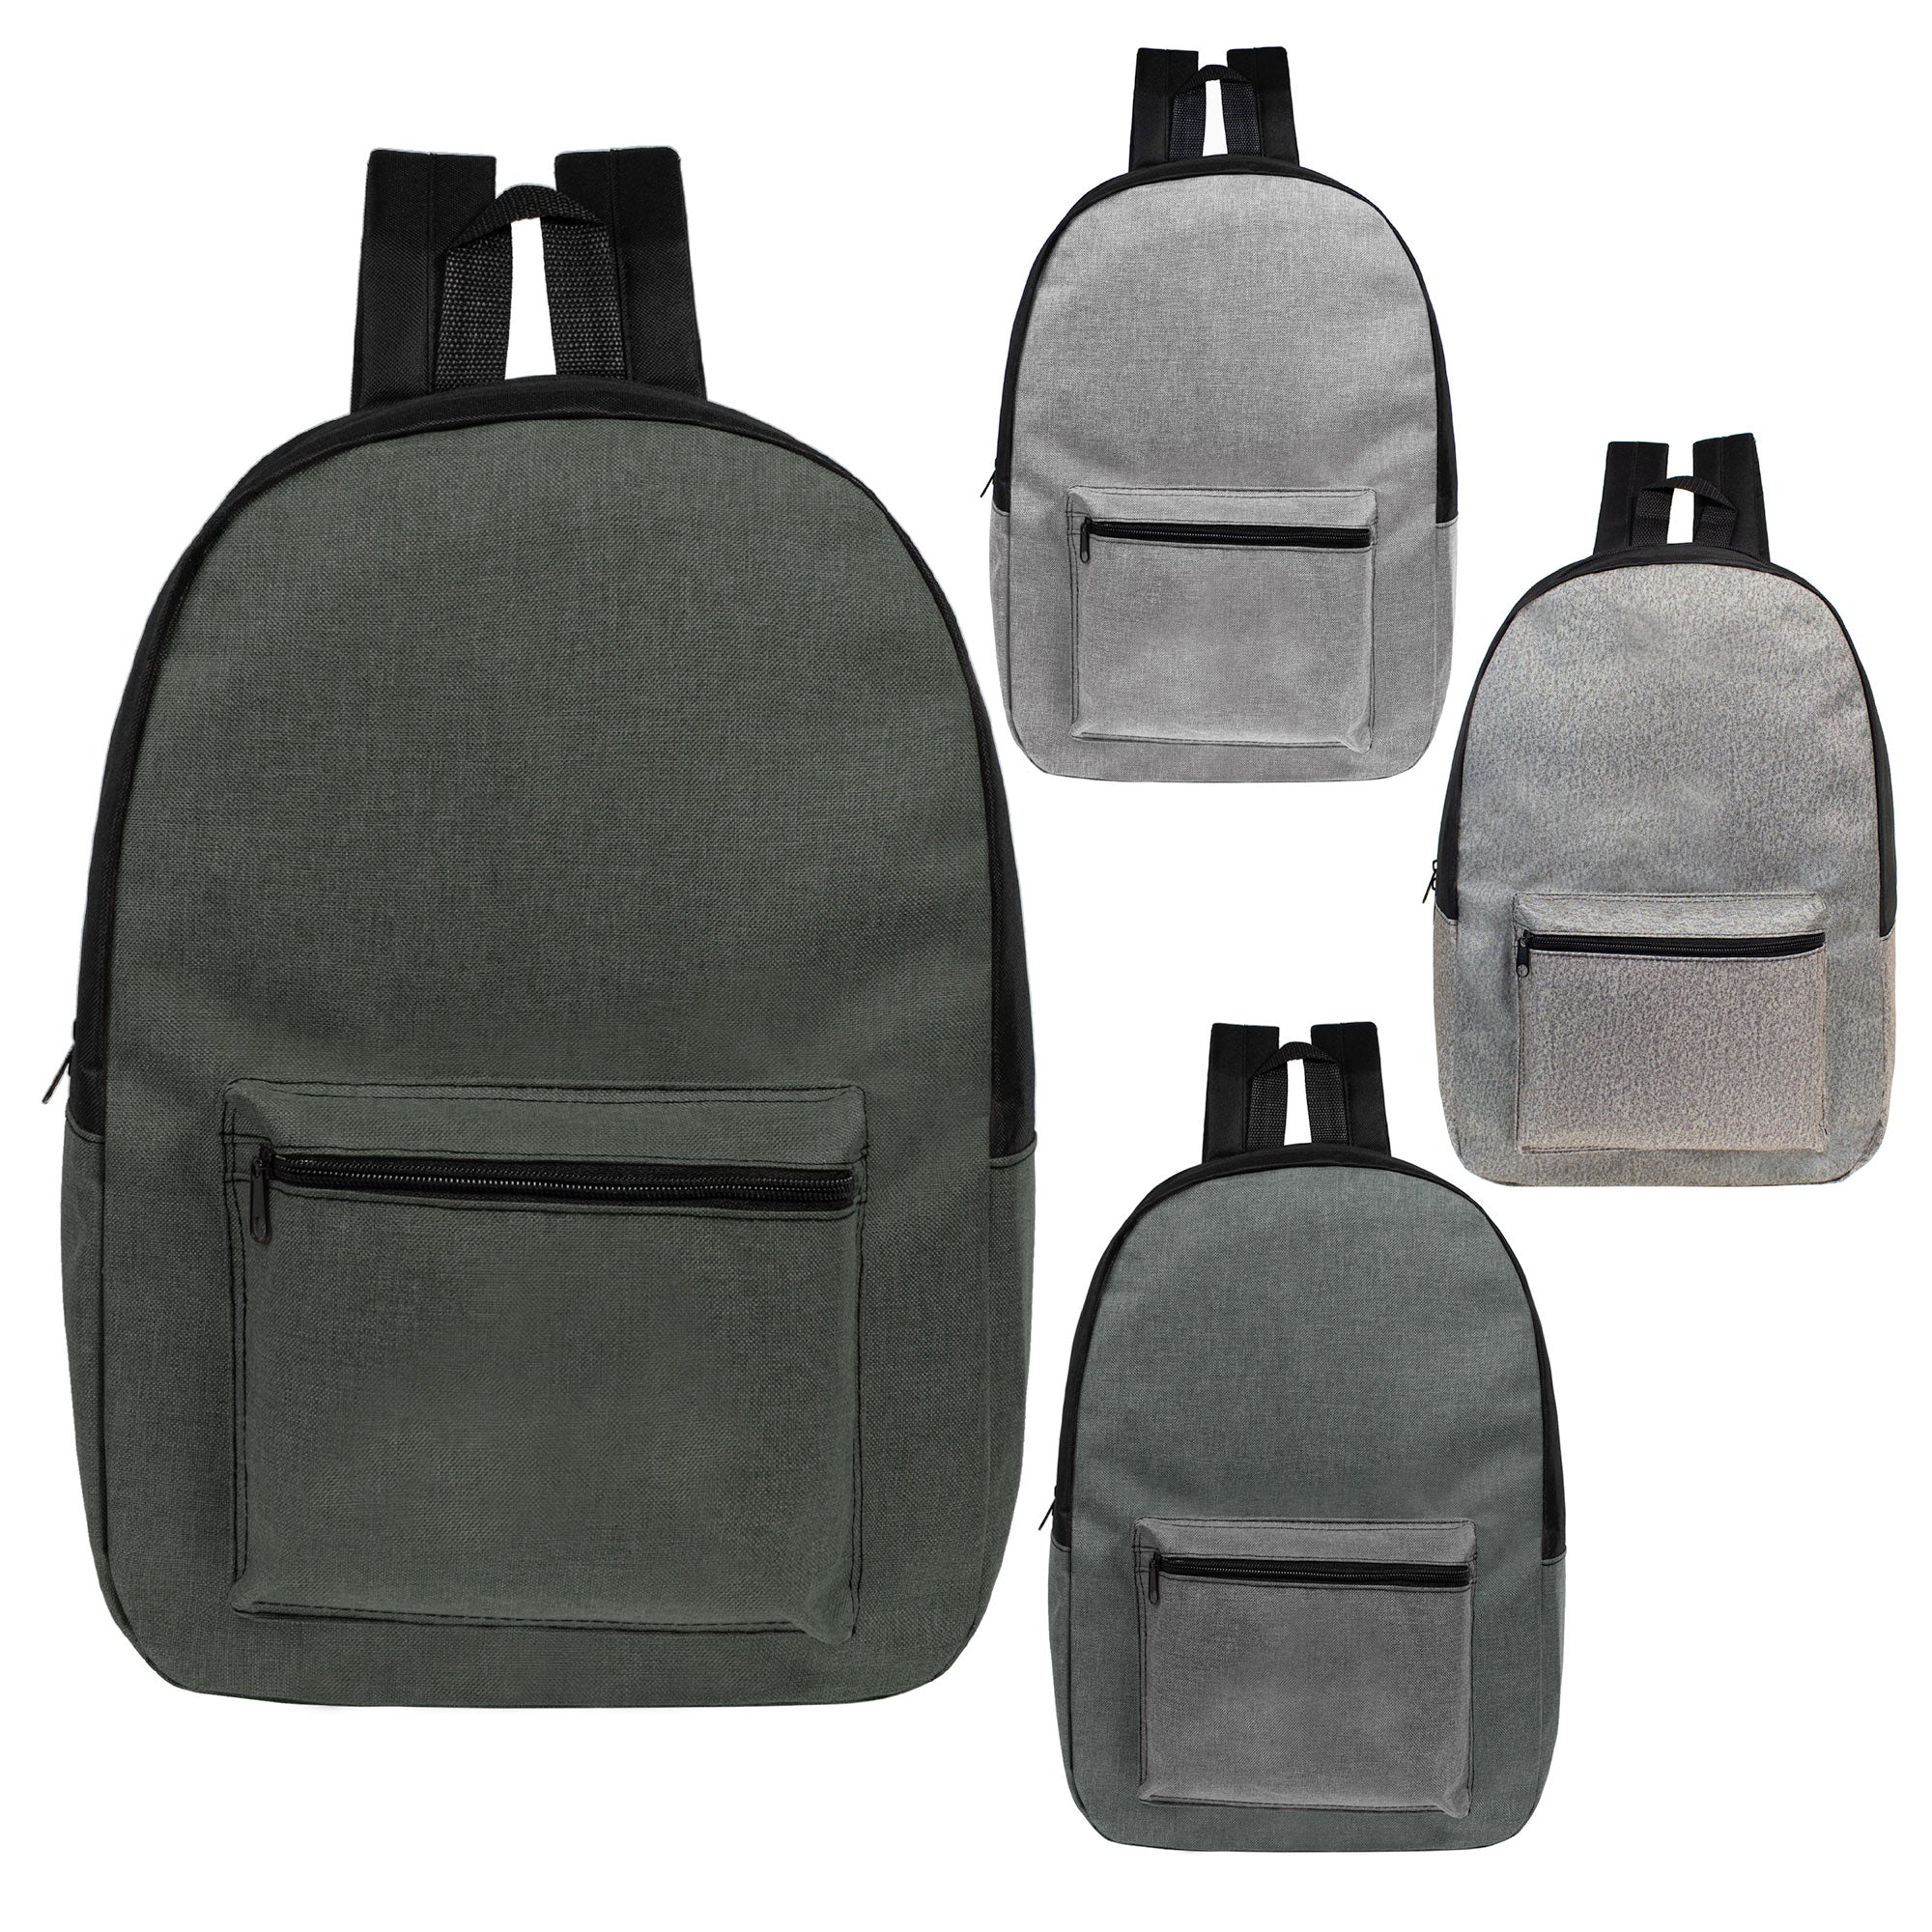 17" Kids Basic Wholesale Backpack in Assorted Gray Shades - Bulk Case of 24 Backpacks